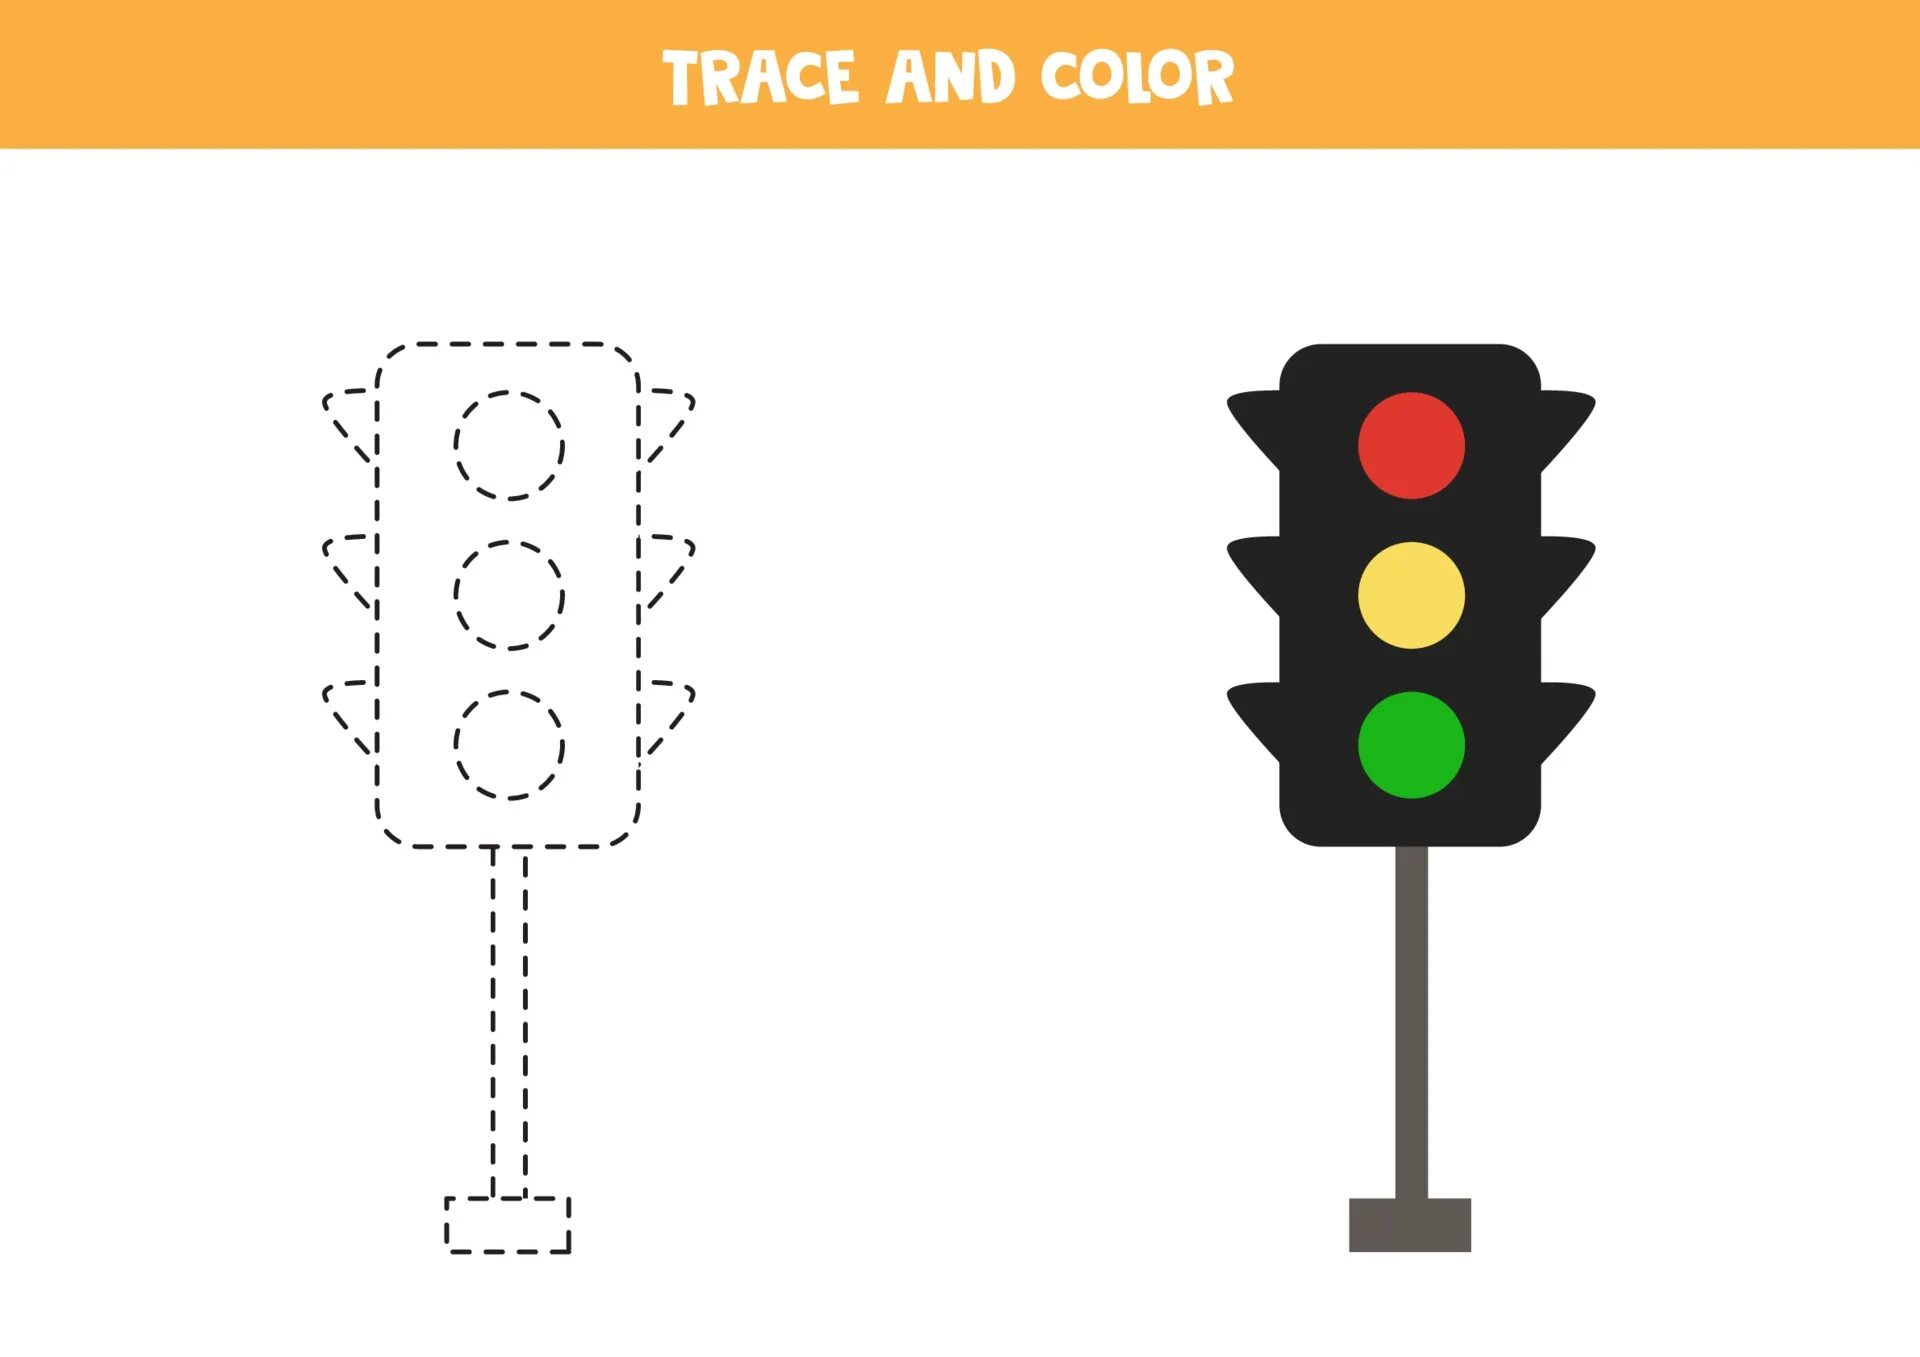 Sign traffic light #3